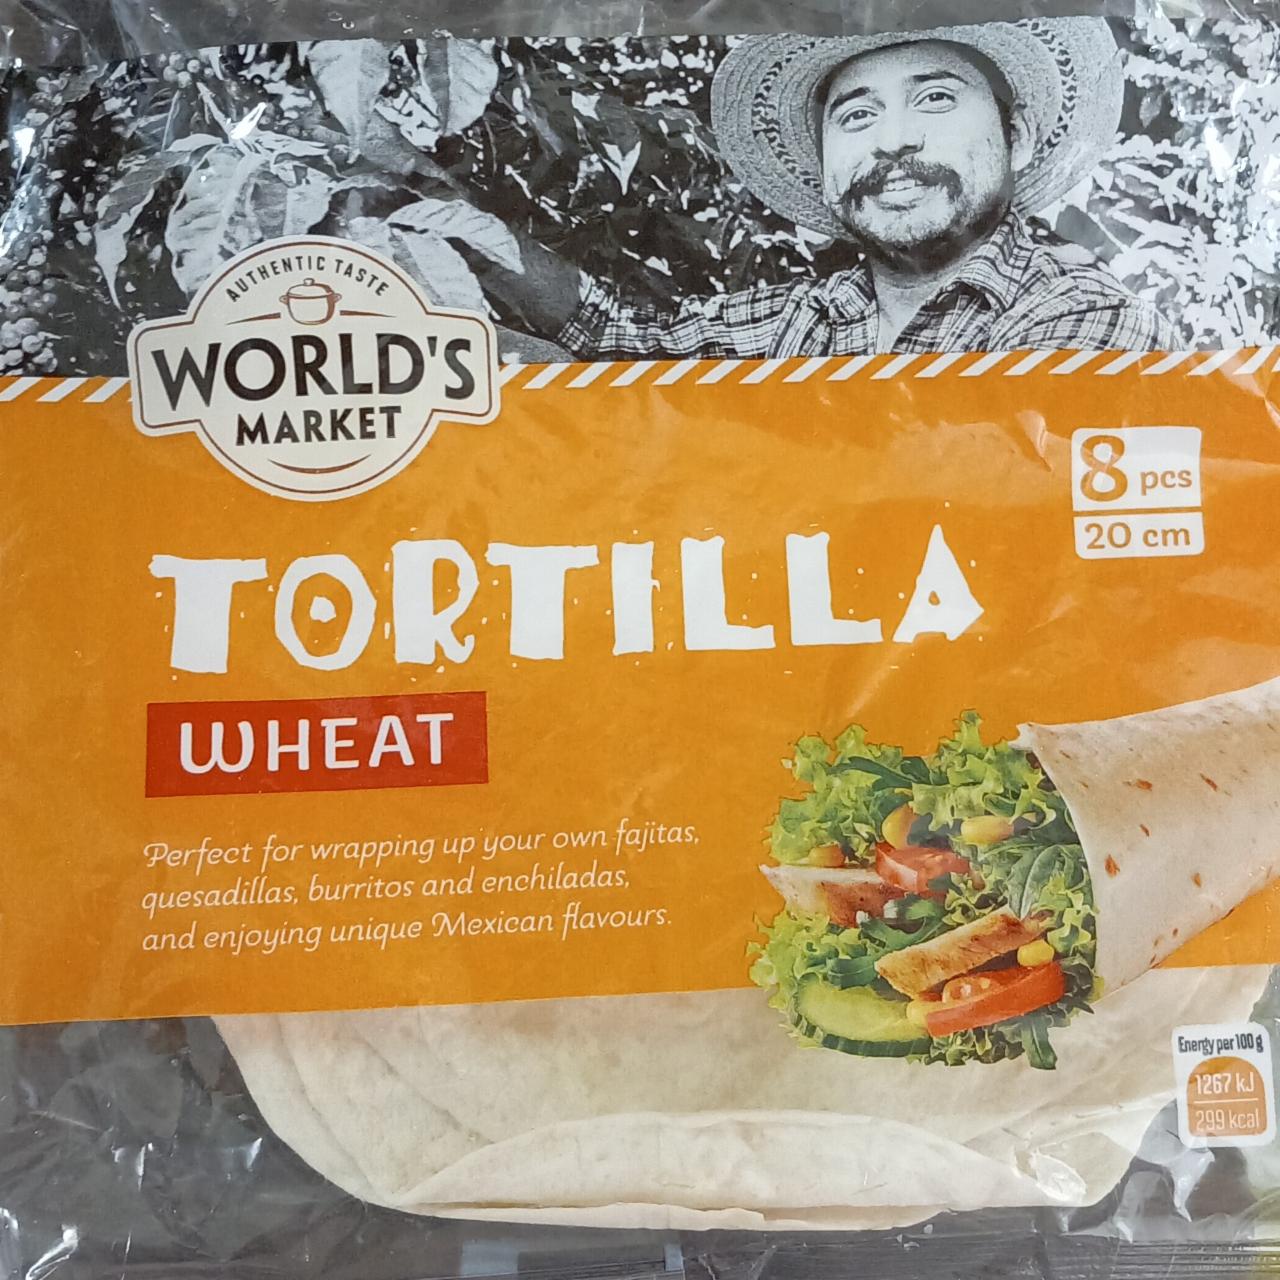 Zdjęcia - Tortilla wheat World's Market